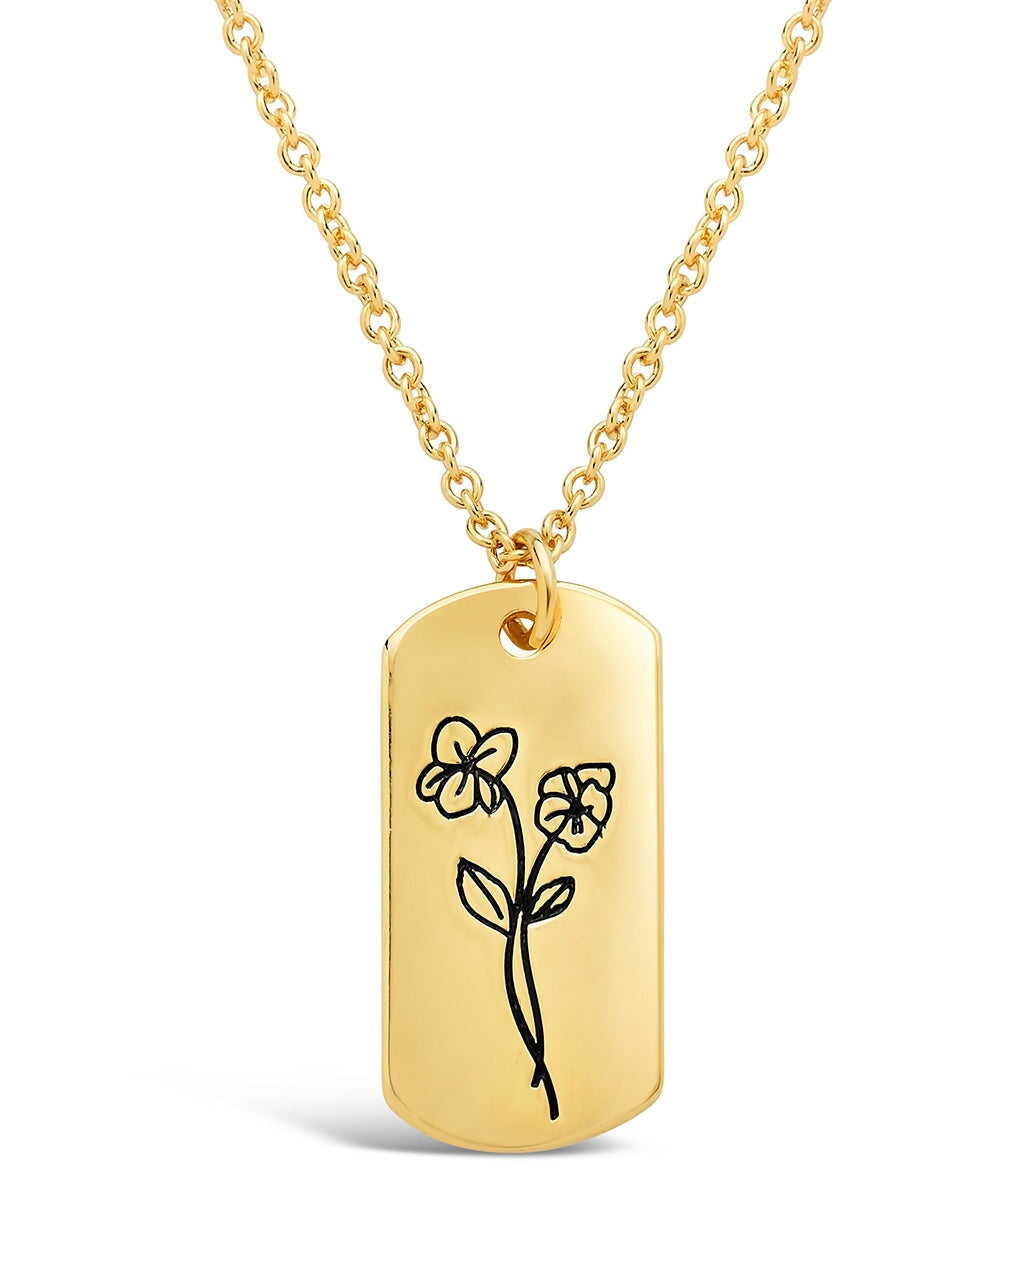 Birth Flower Pendant Necklace Sterling Forever Gold February / Violet 